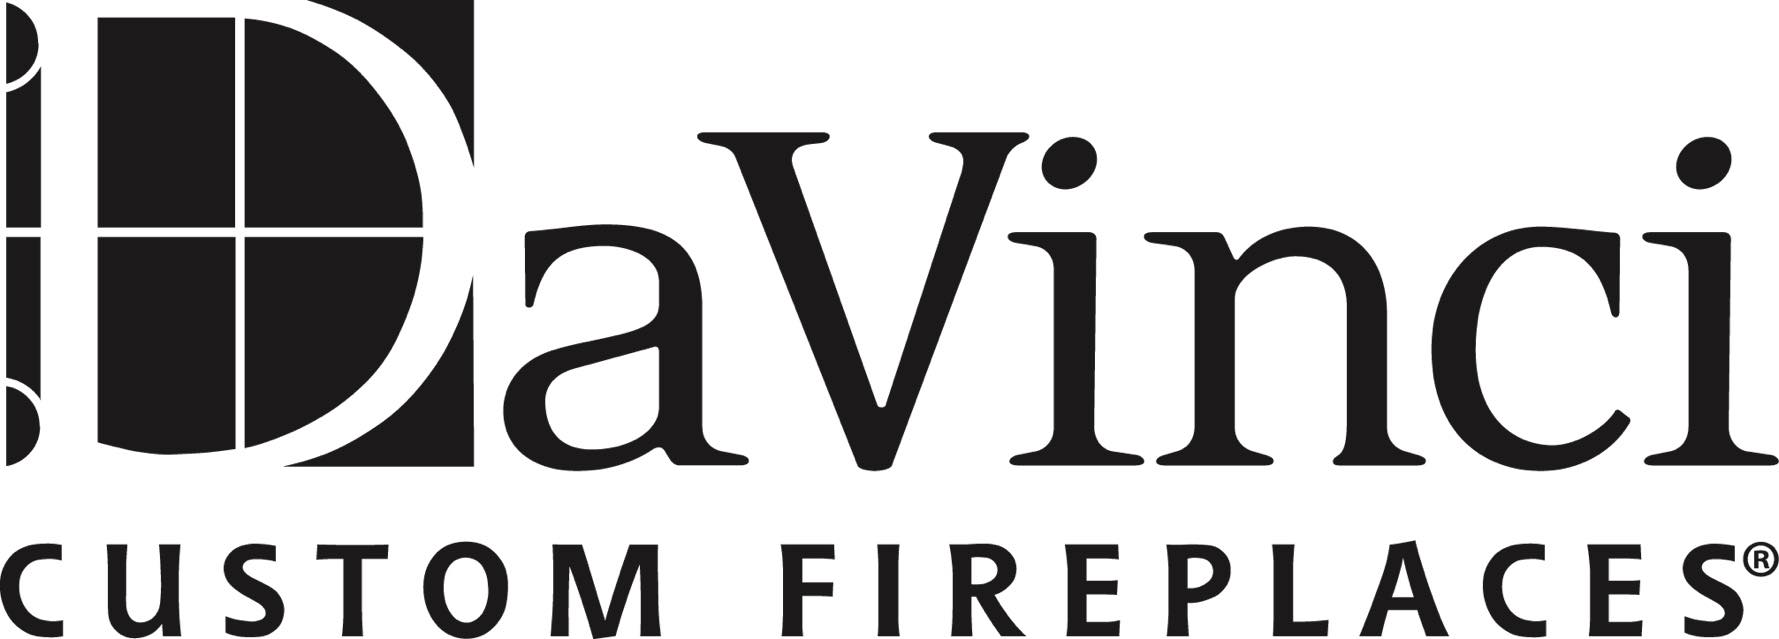 Davinci Custom Fireplaces brand logo